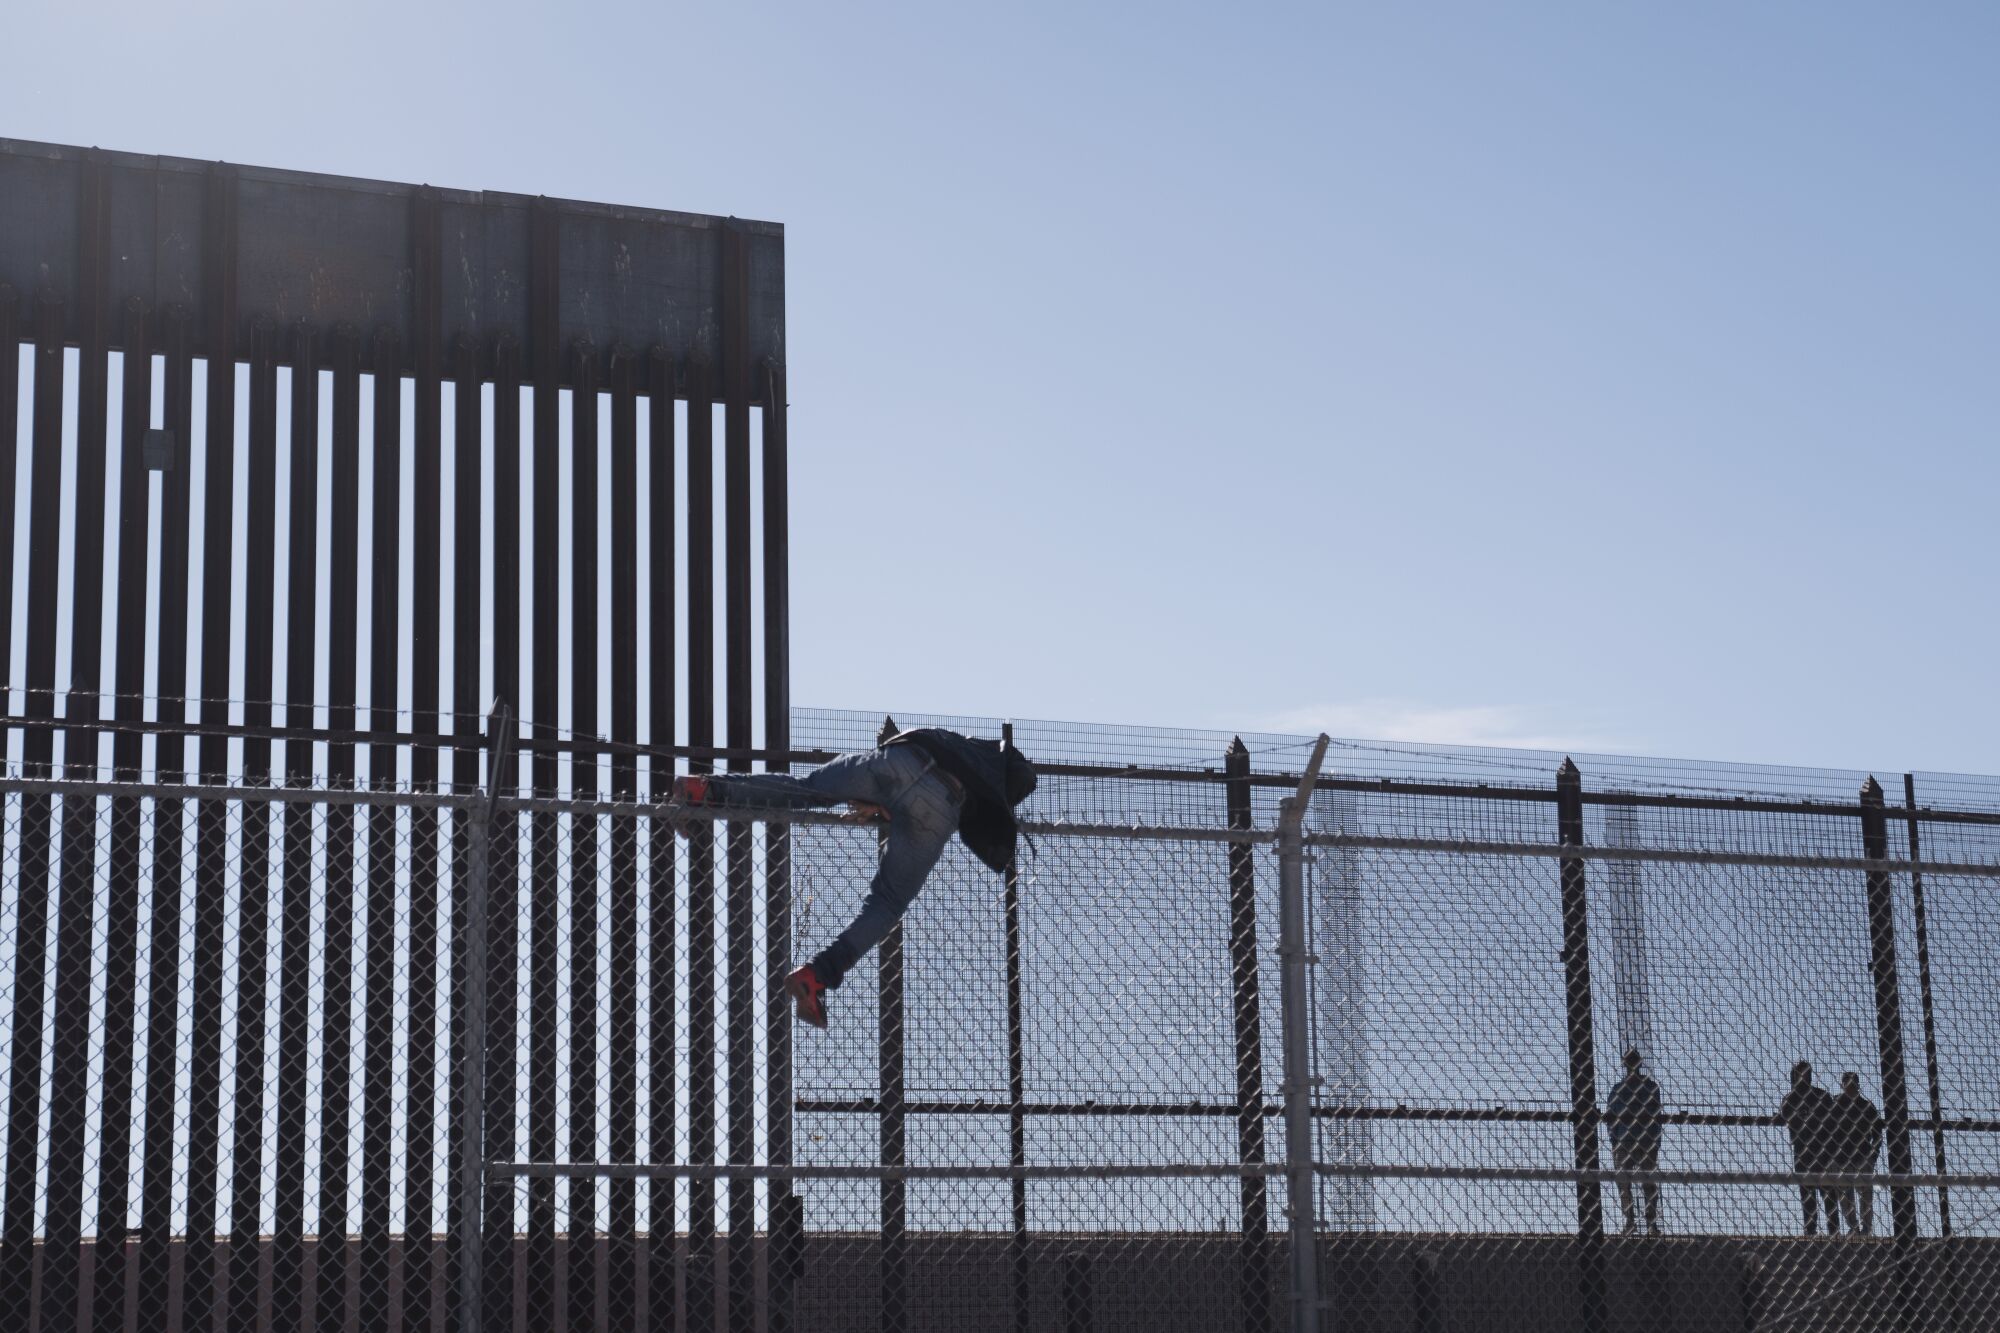 A person climbing over a fence 